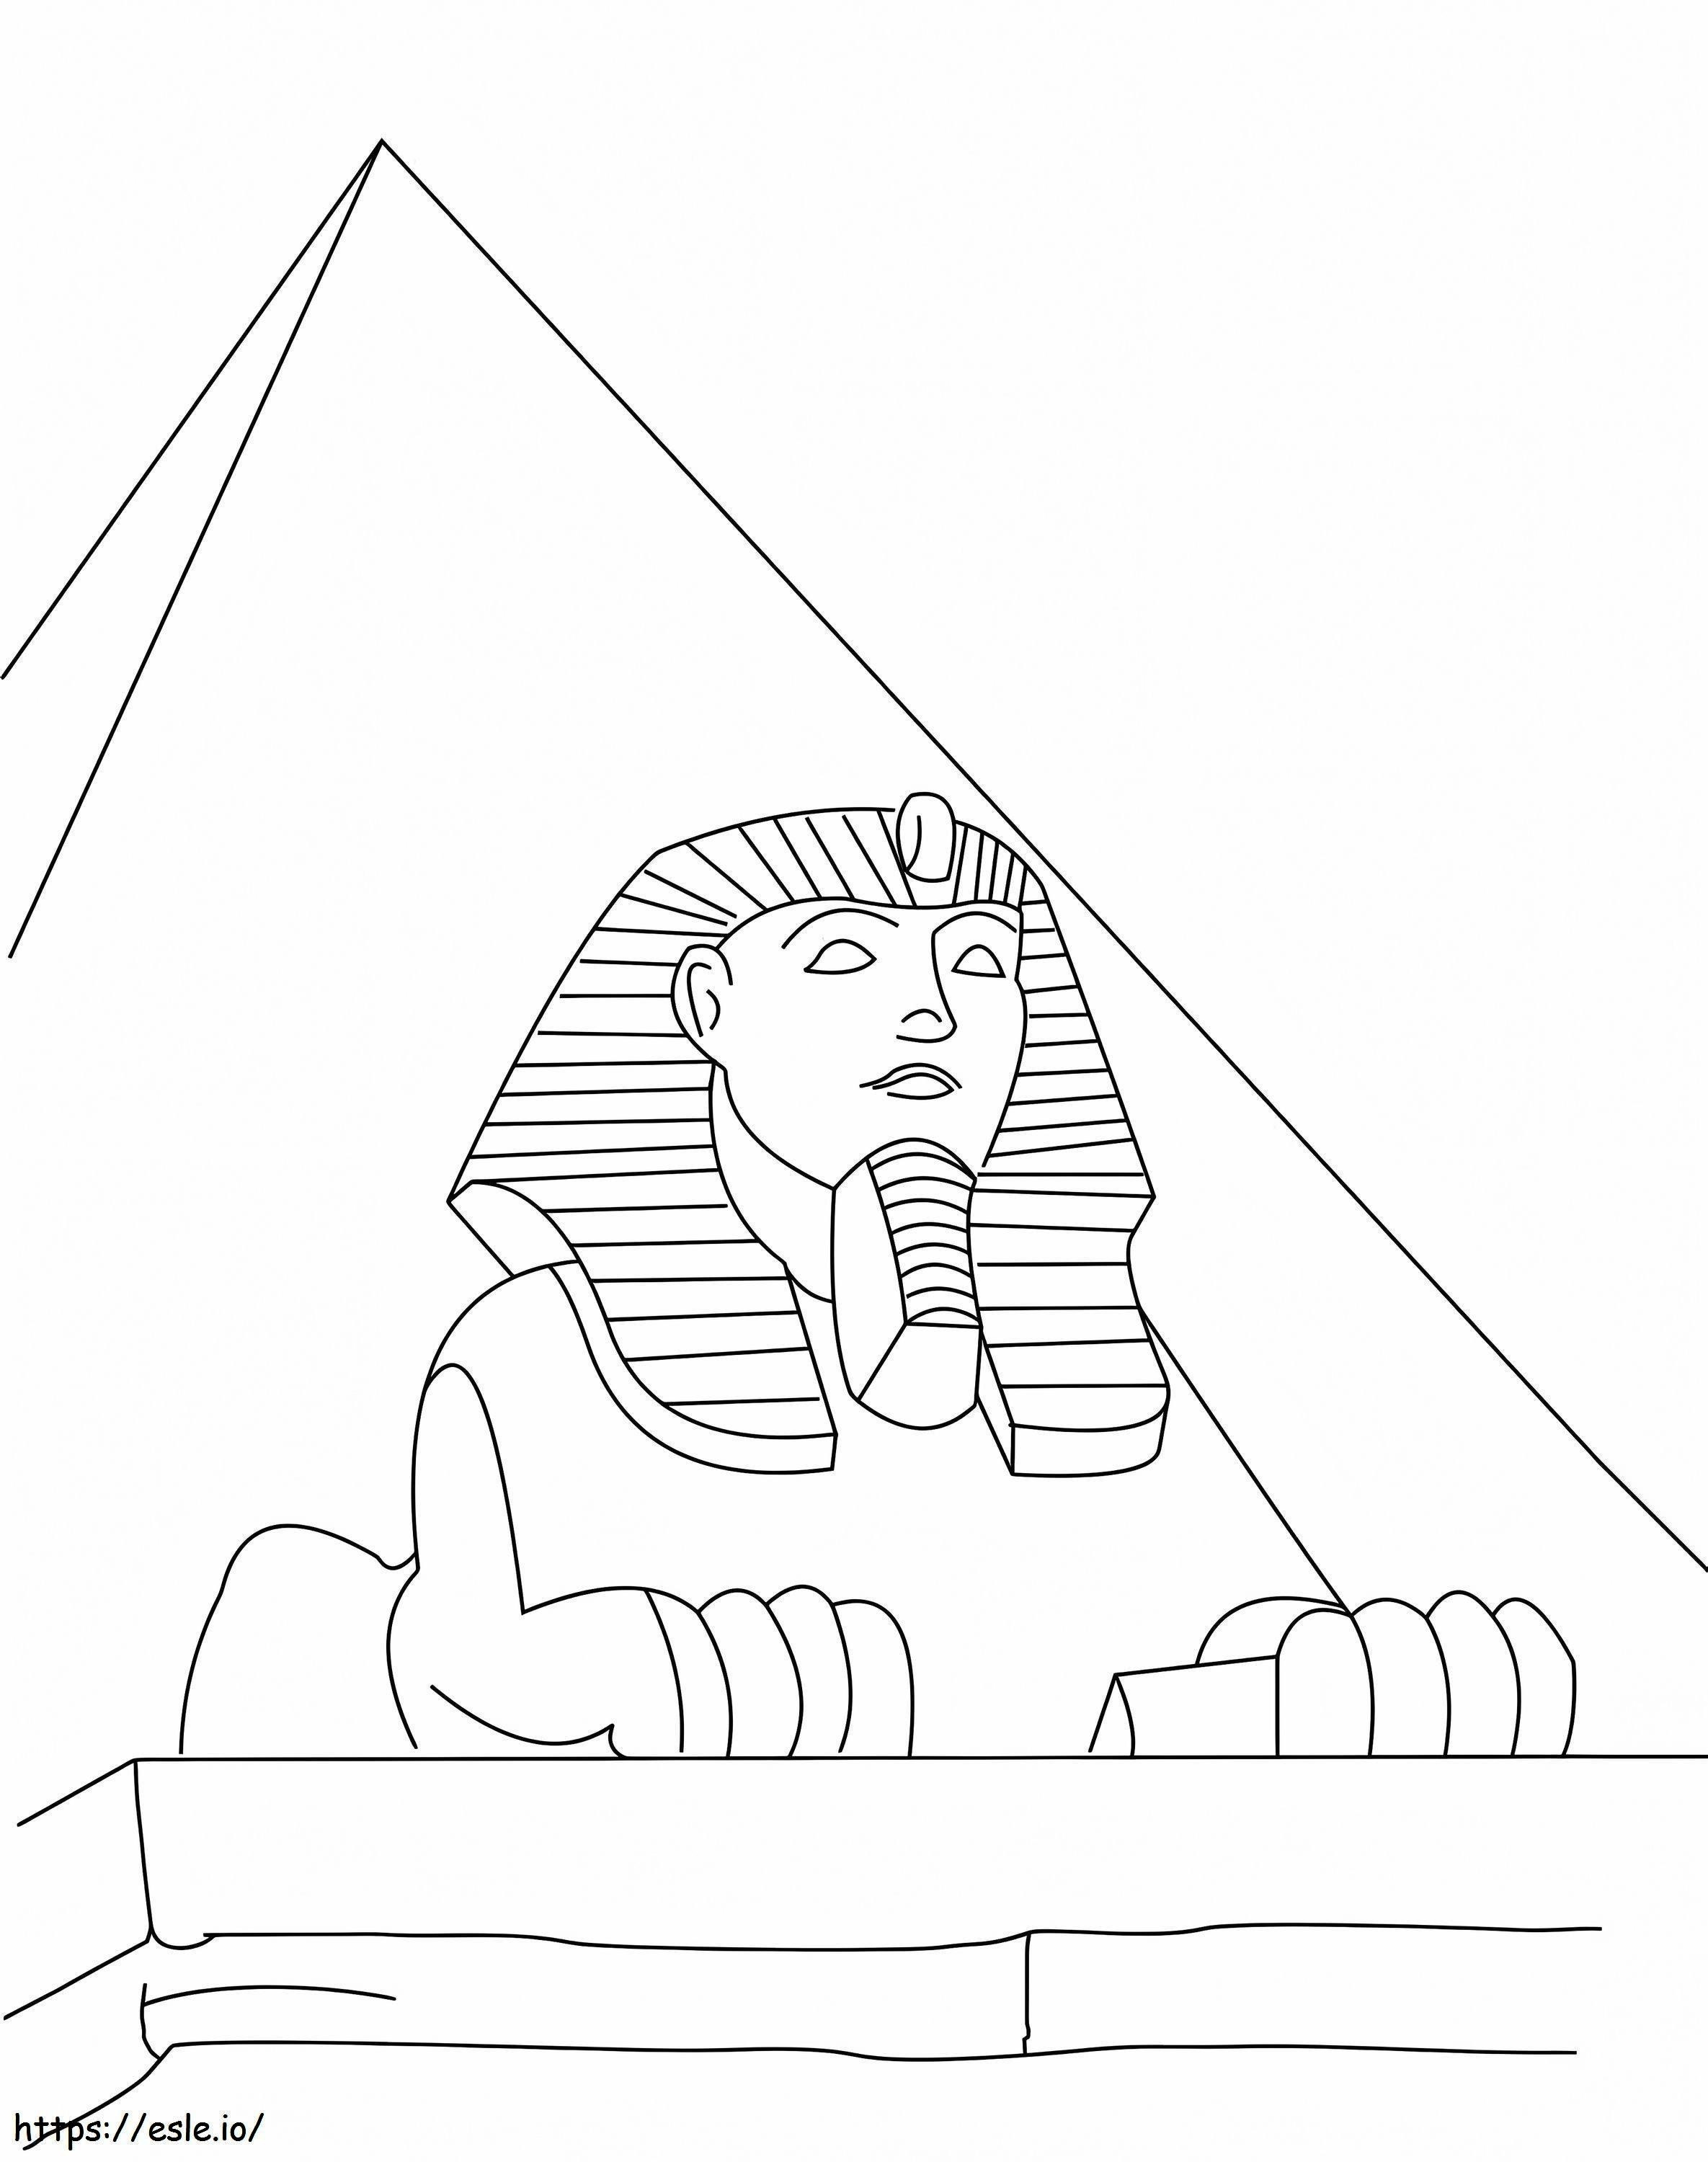 1542941189 3350 29315 Sphinks Ägypten ausmalbilder